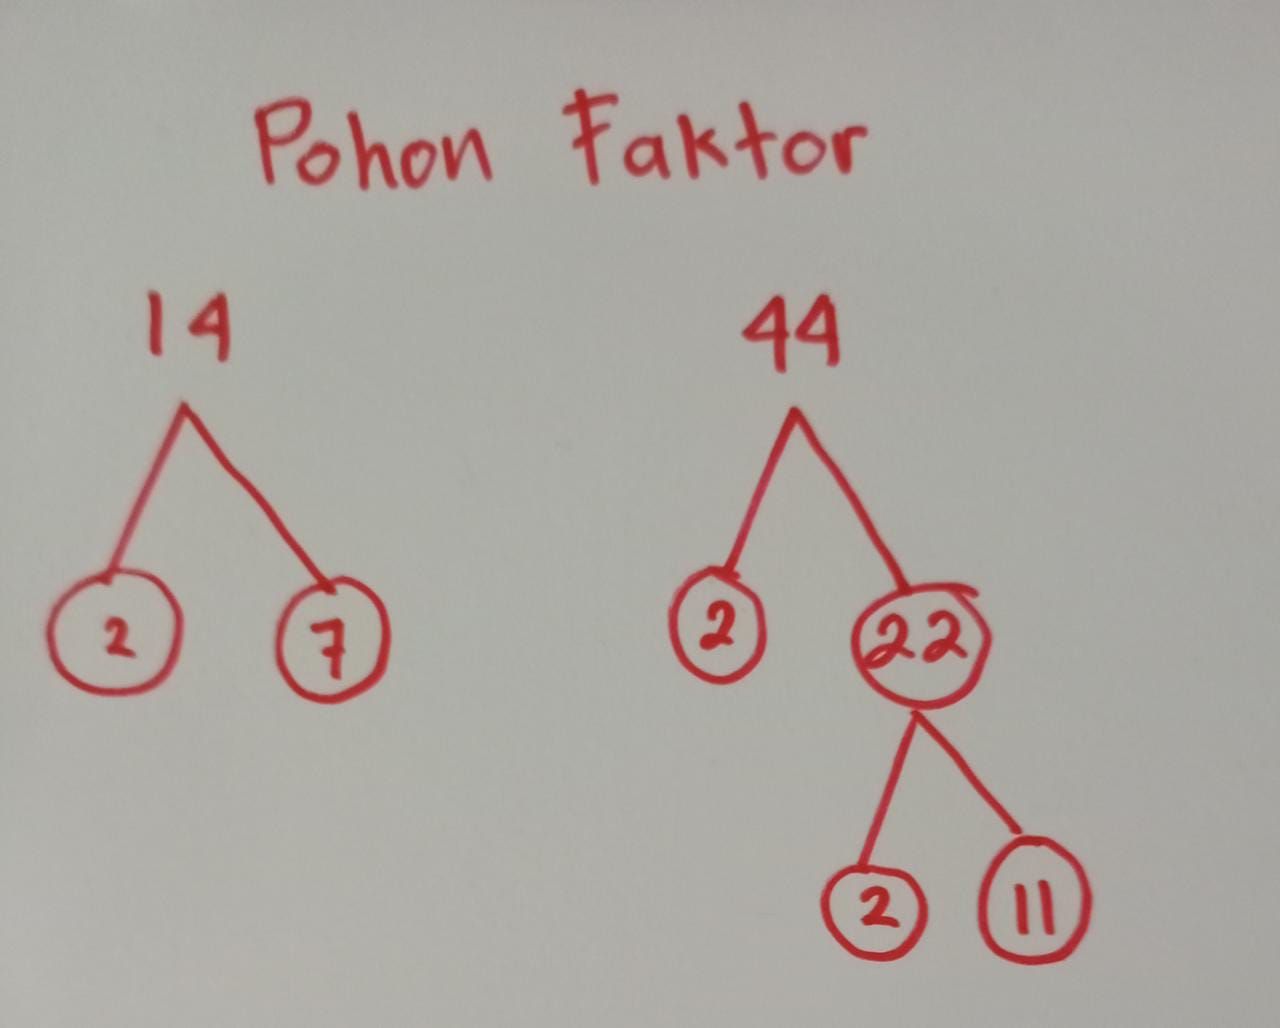 pohon faktor untuk menentukan faktorisasi prima dari bilangan 14 dan 44/Sri Setiyowati/Portal Pekalongan